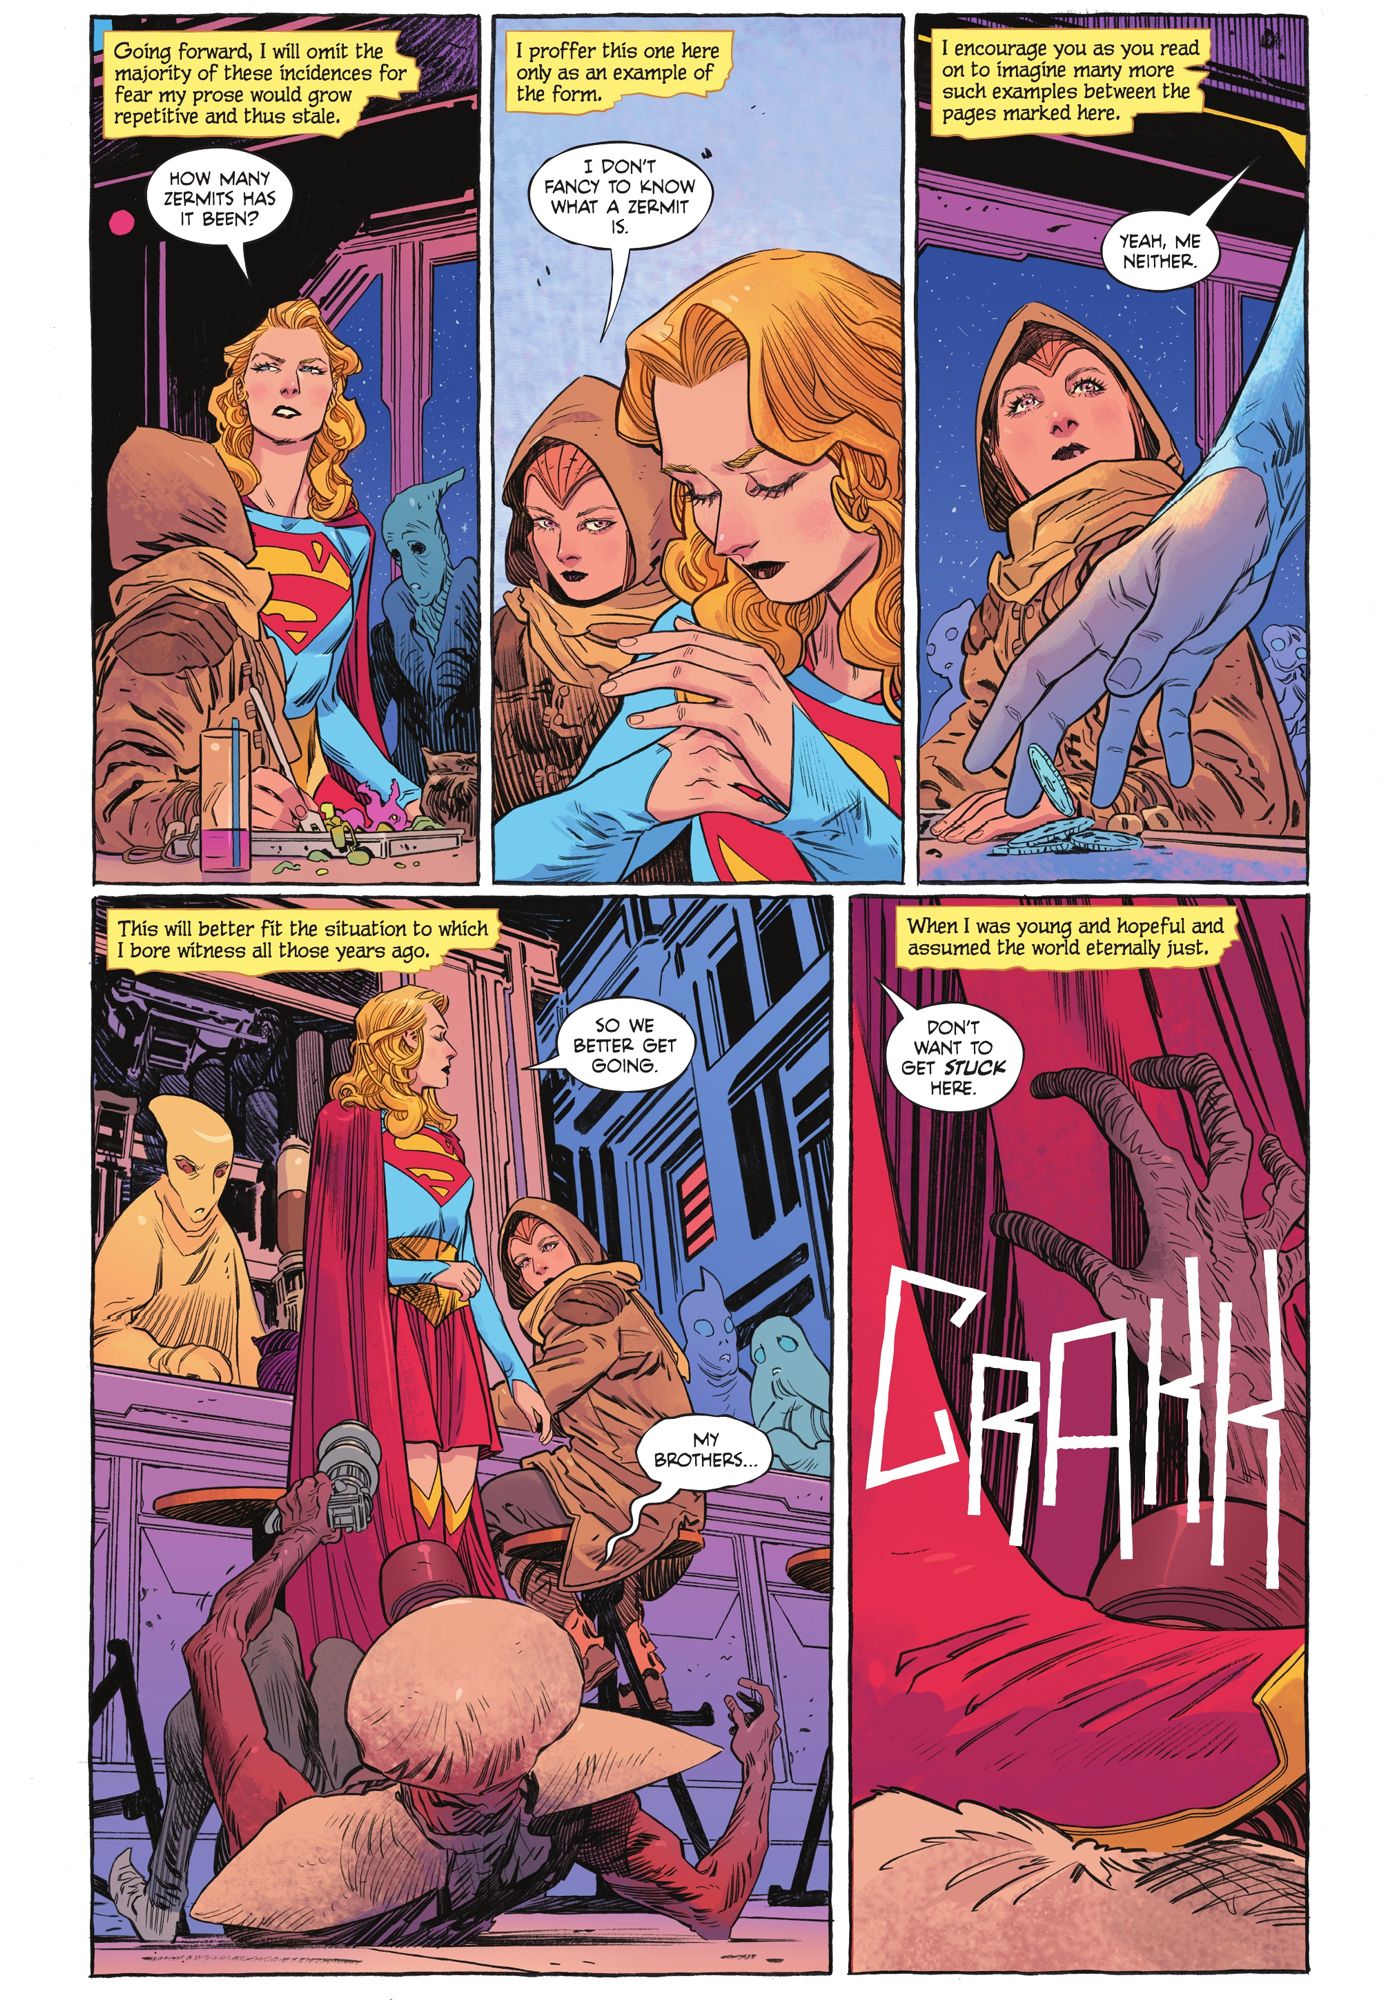 Supergirl Proves She’s Way More Brutal Than Superman